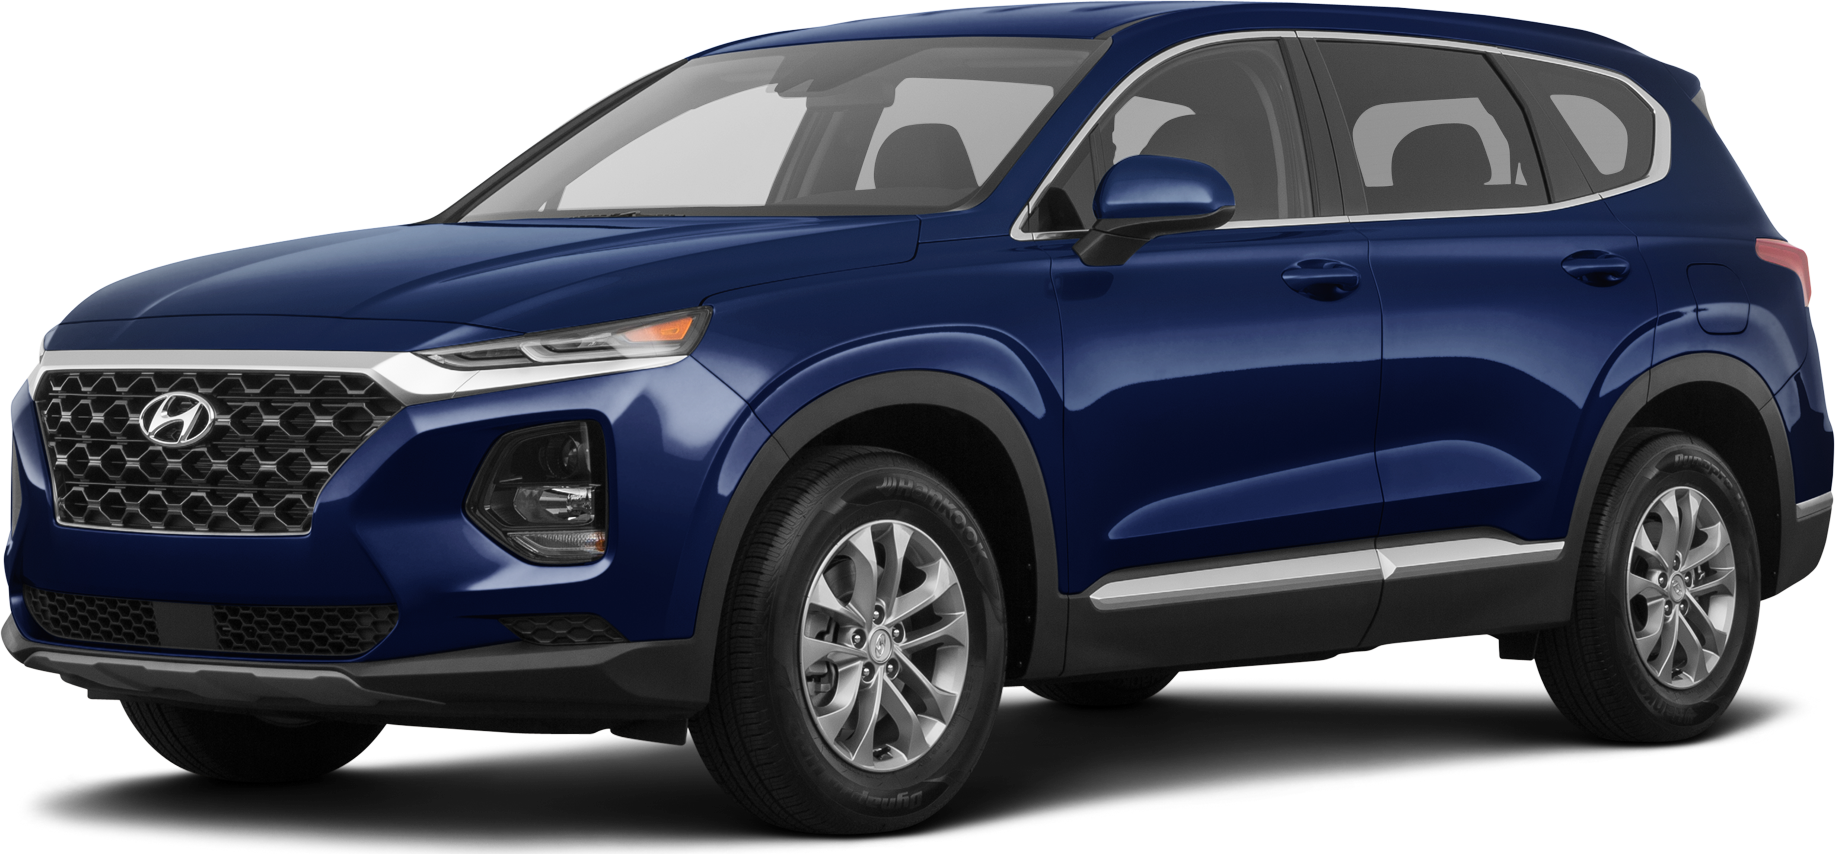 2020 Hyundai Santa Fe Reviews, Pricing & Specs | Kelley Blue Book